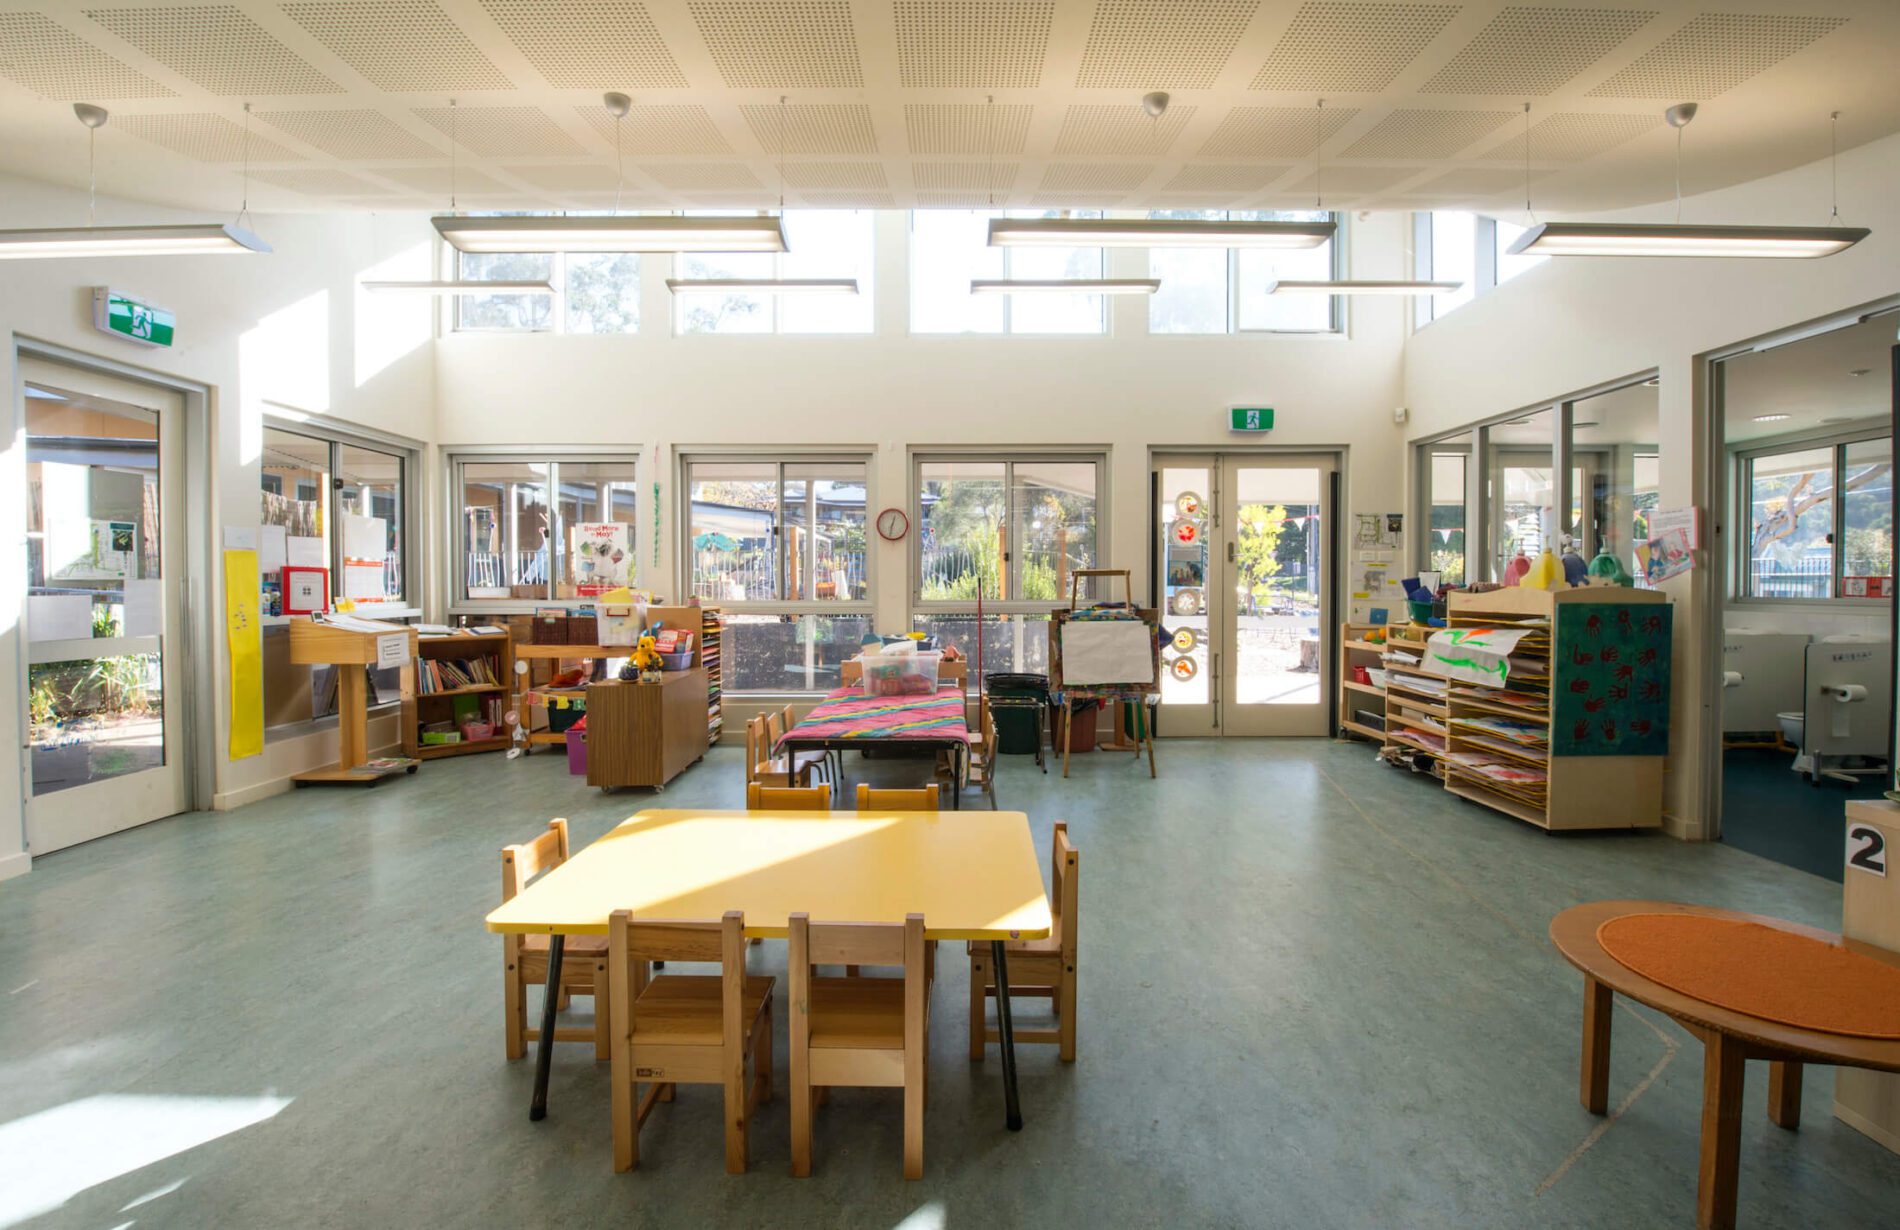 Kindergarten space with high windows